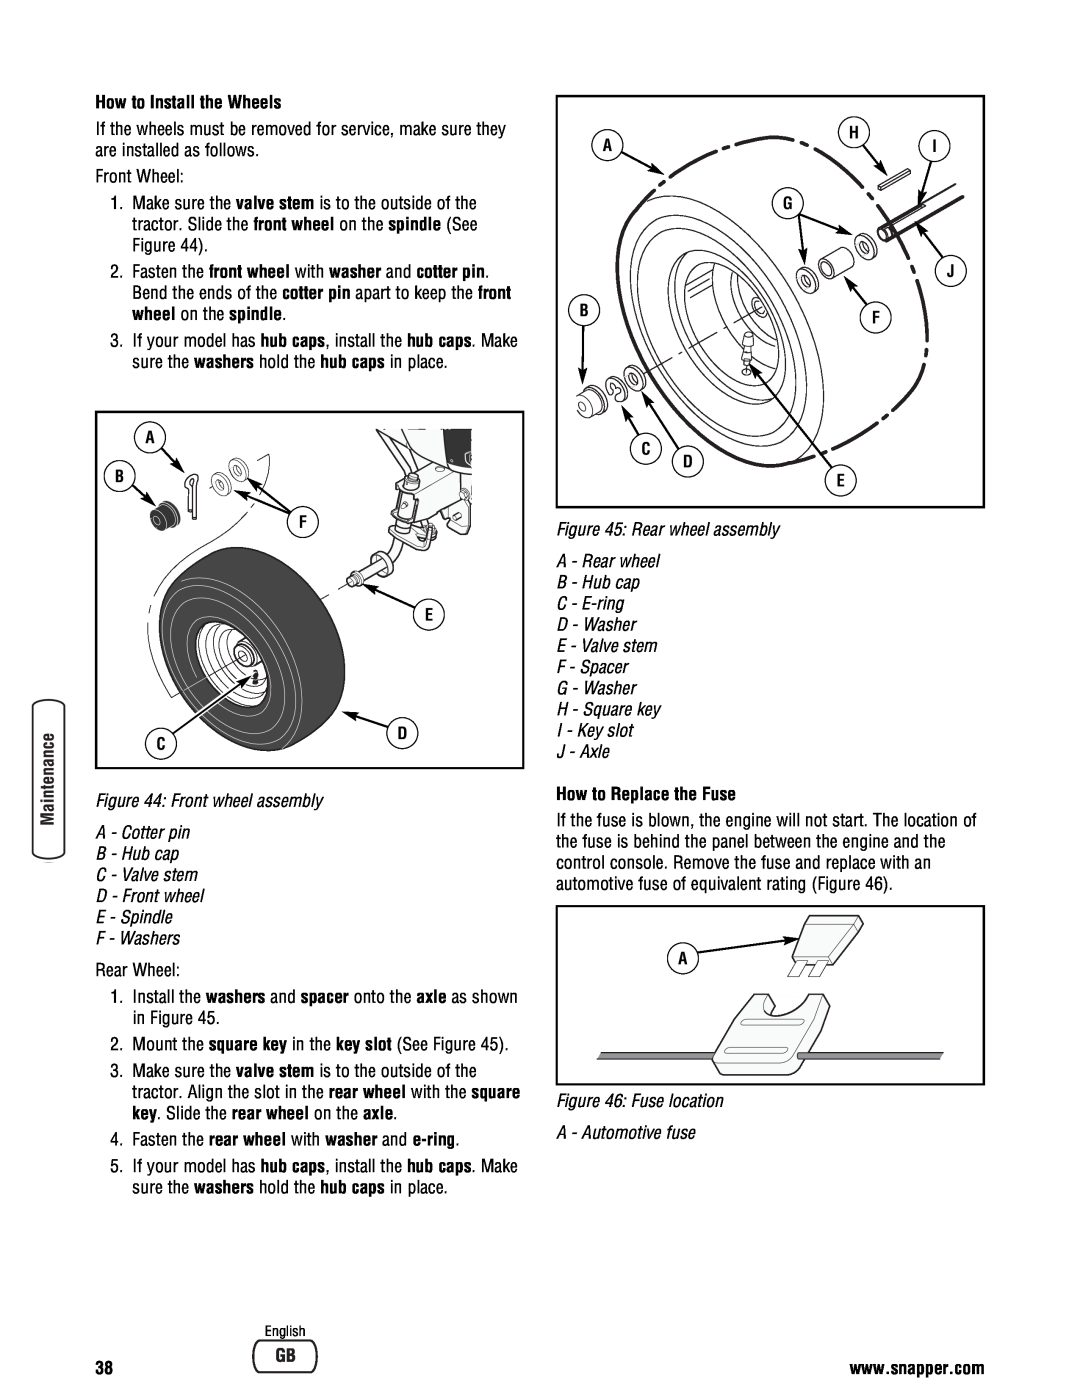 Snapper specifications Rear wheel assembly, A - Rear wheel B - Hub cap C - E-ring D - Washer, G - Washer, J - Axle 